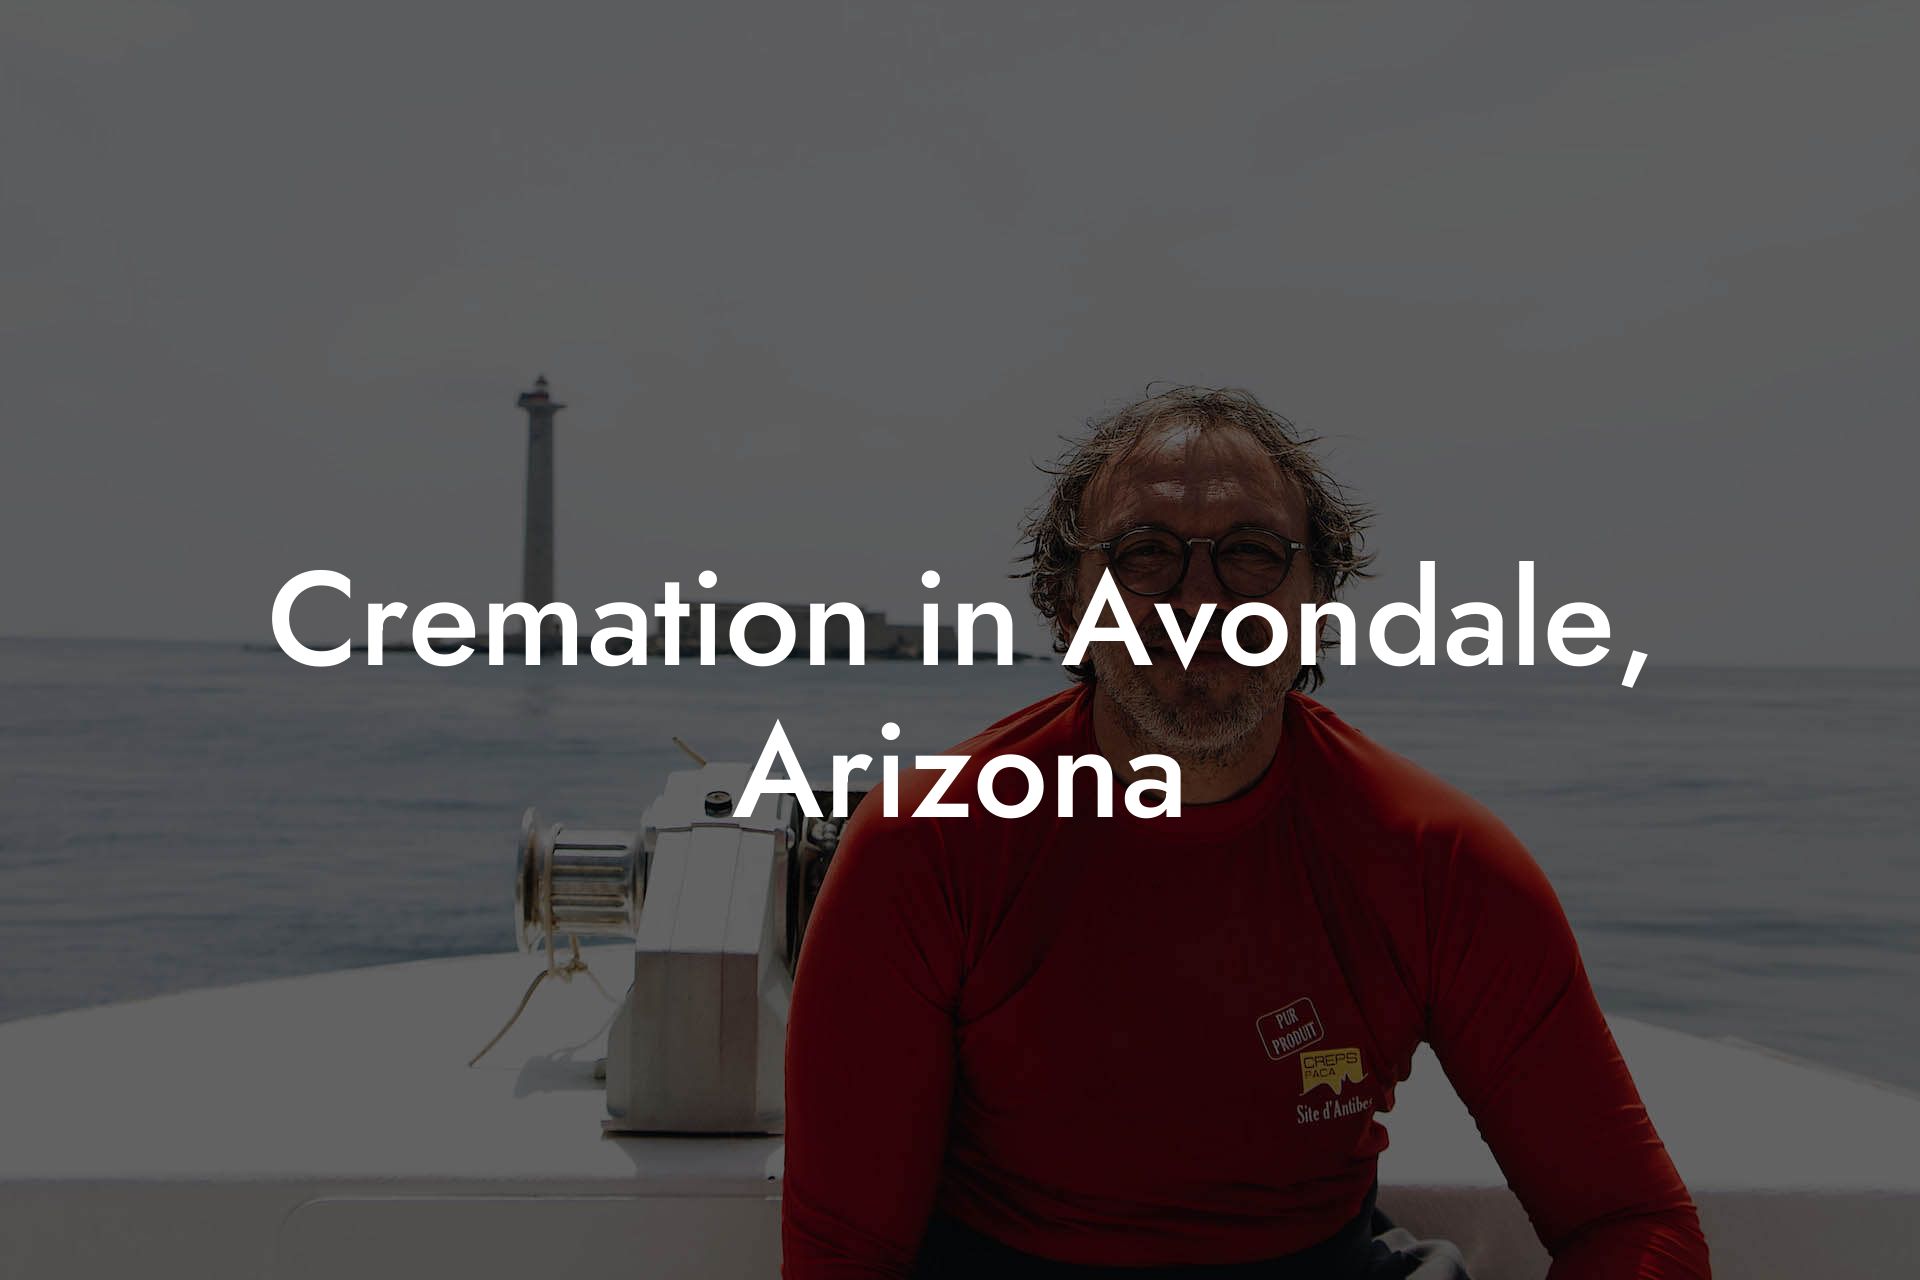 Cremation in Avondale, Arizona